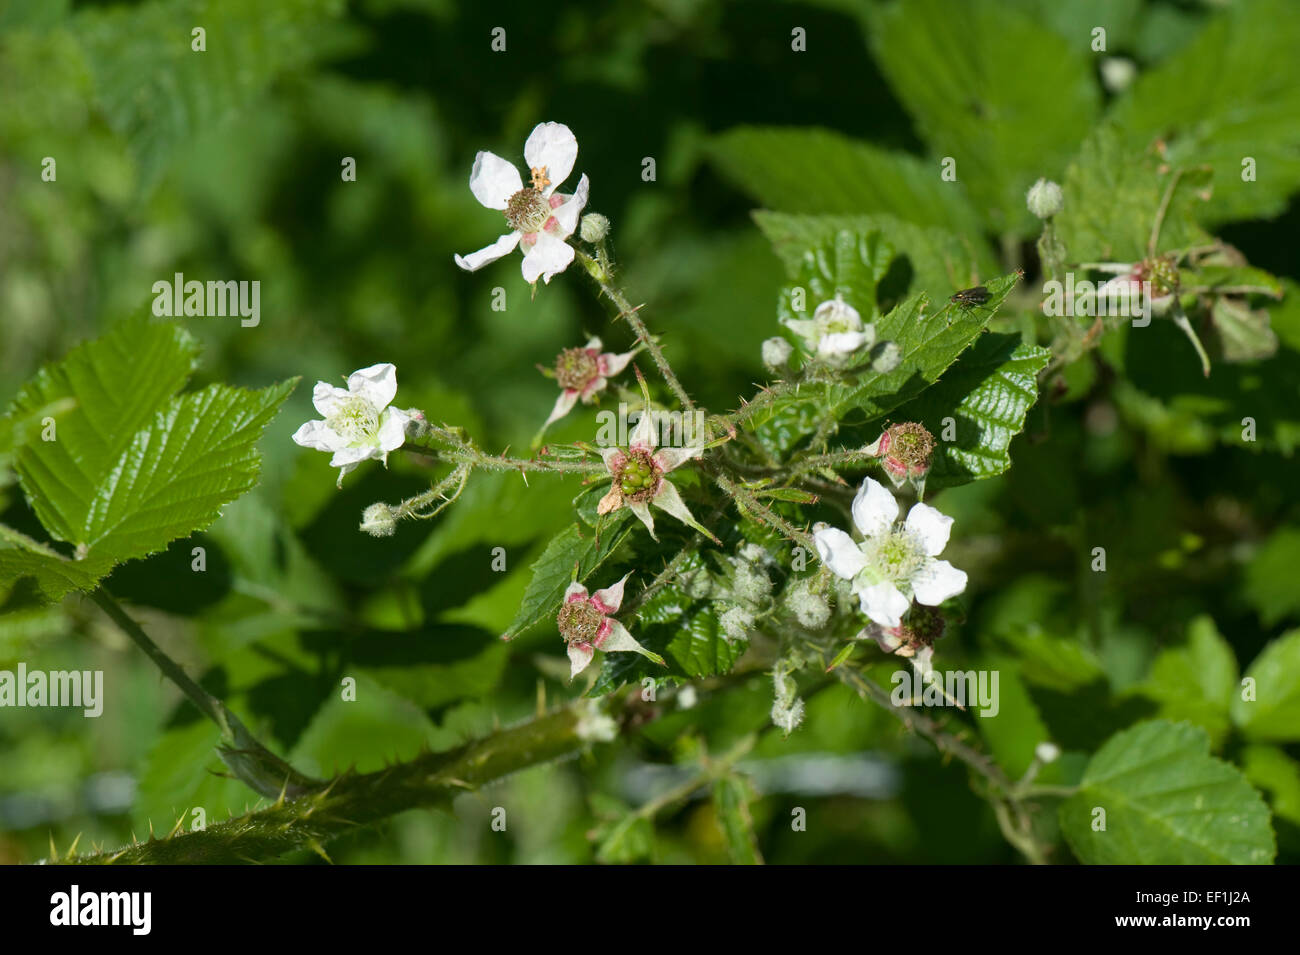 Blackberry or bramble, Rubus fruticosus, in flowerand early fruit, Berkshire, June Stock Photo